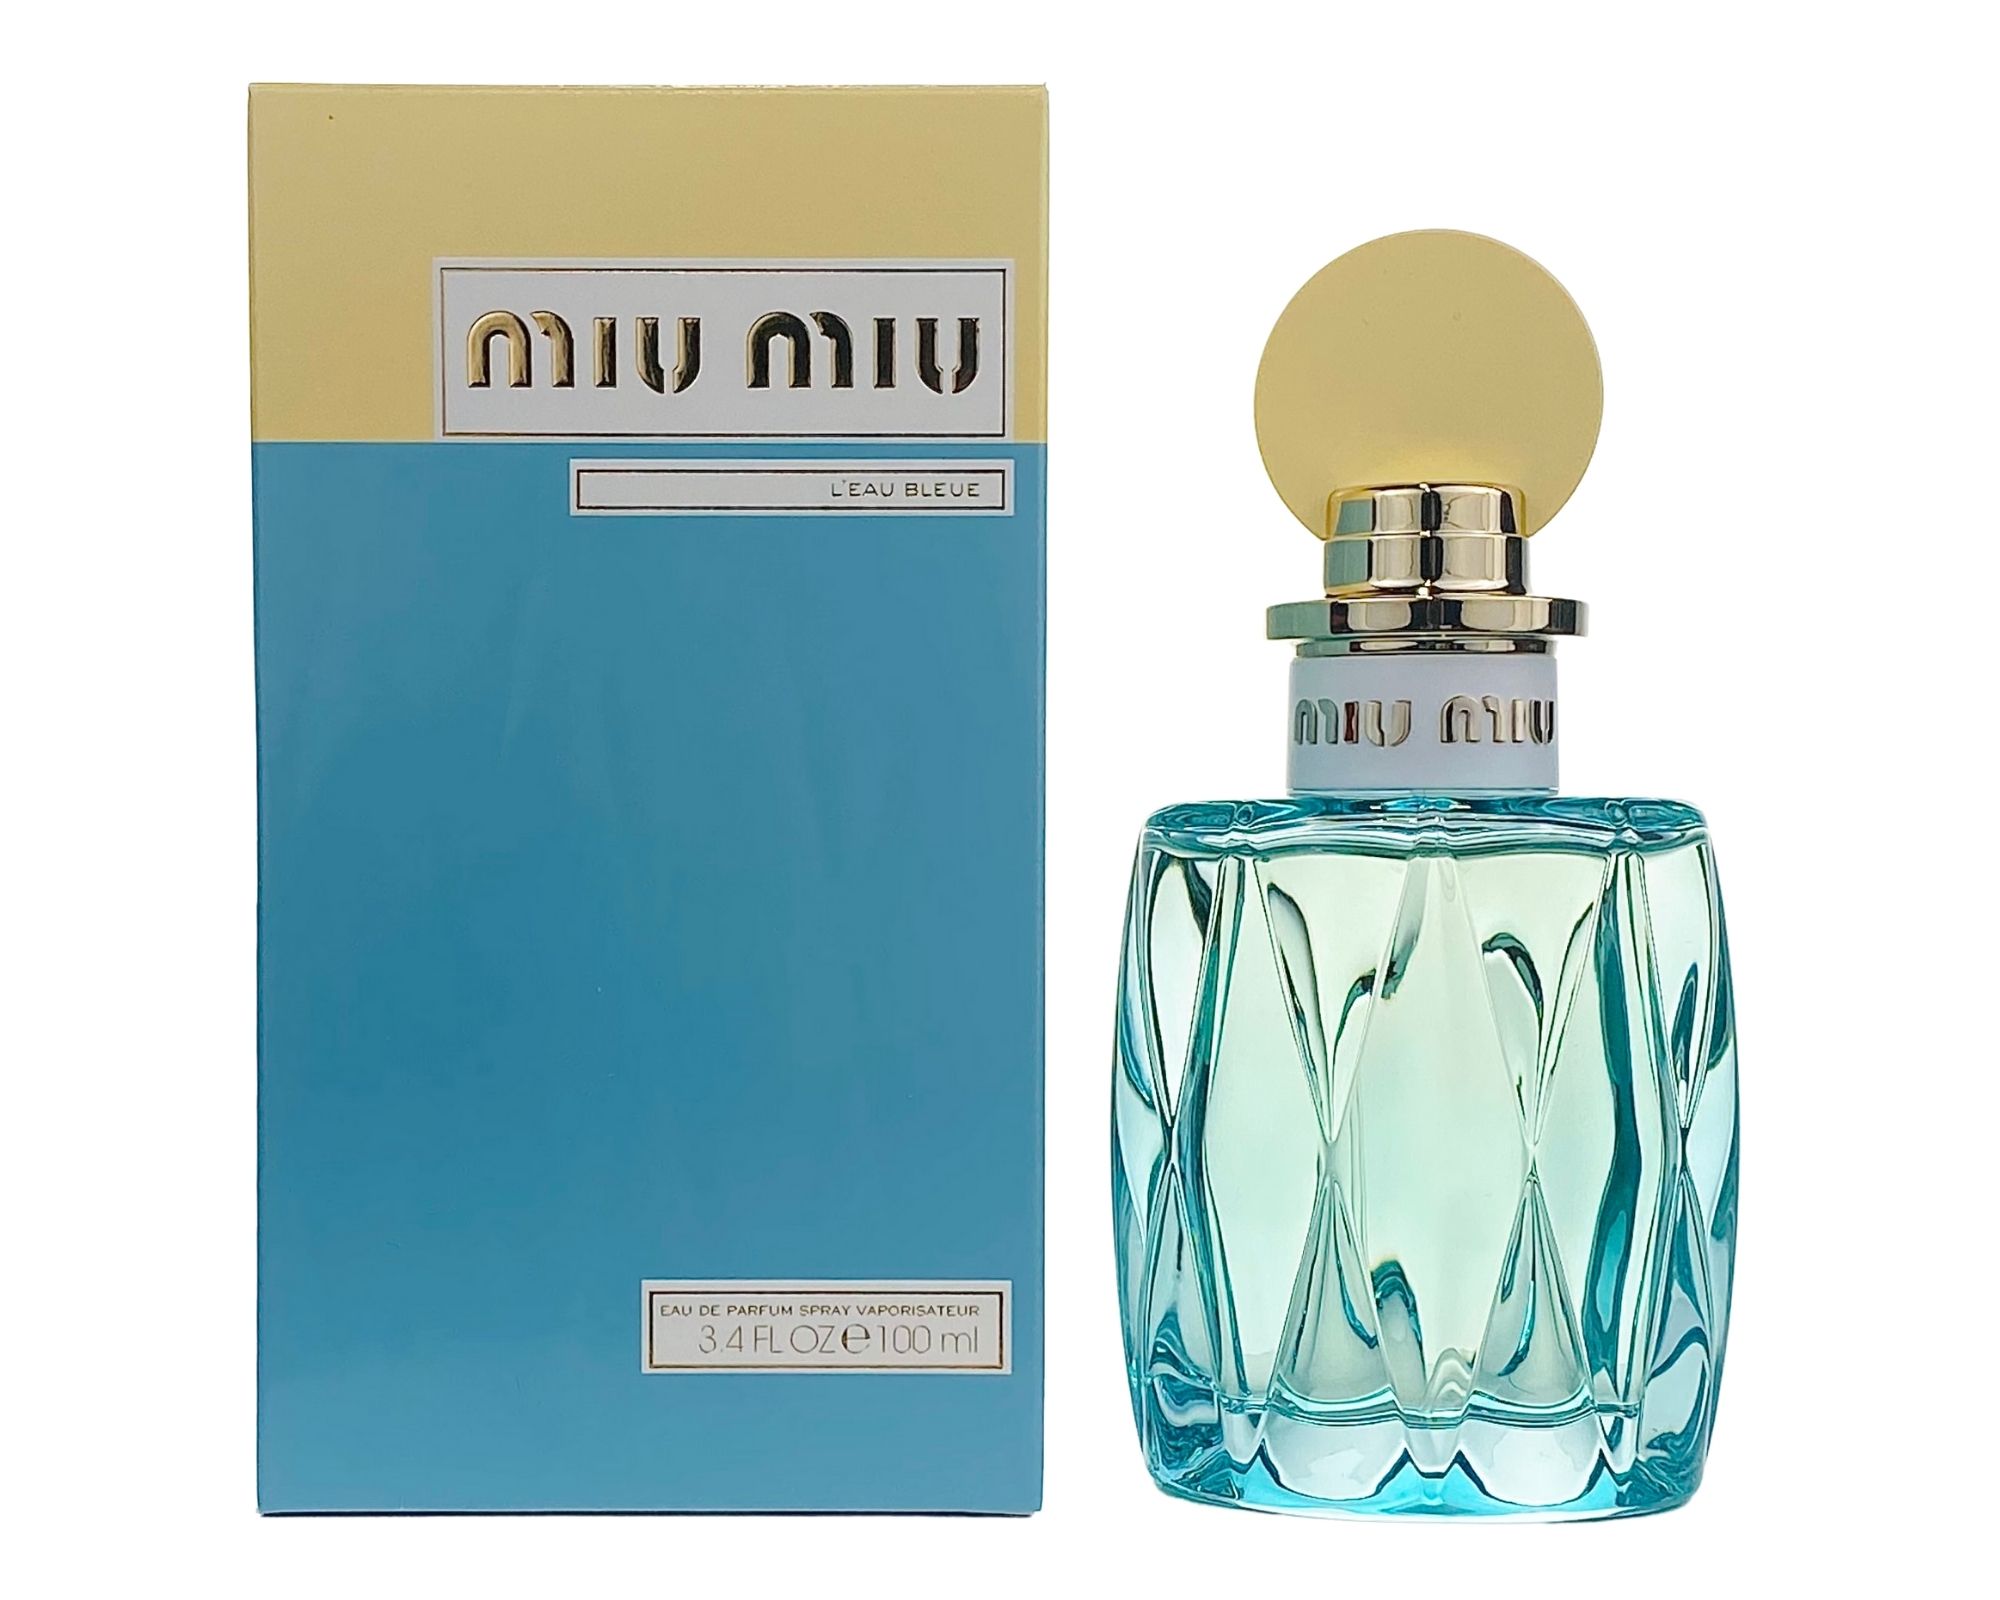 Miu Miu Perfume for Women 3.4oz $69.99